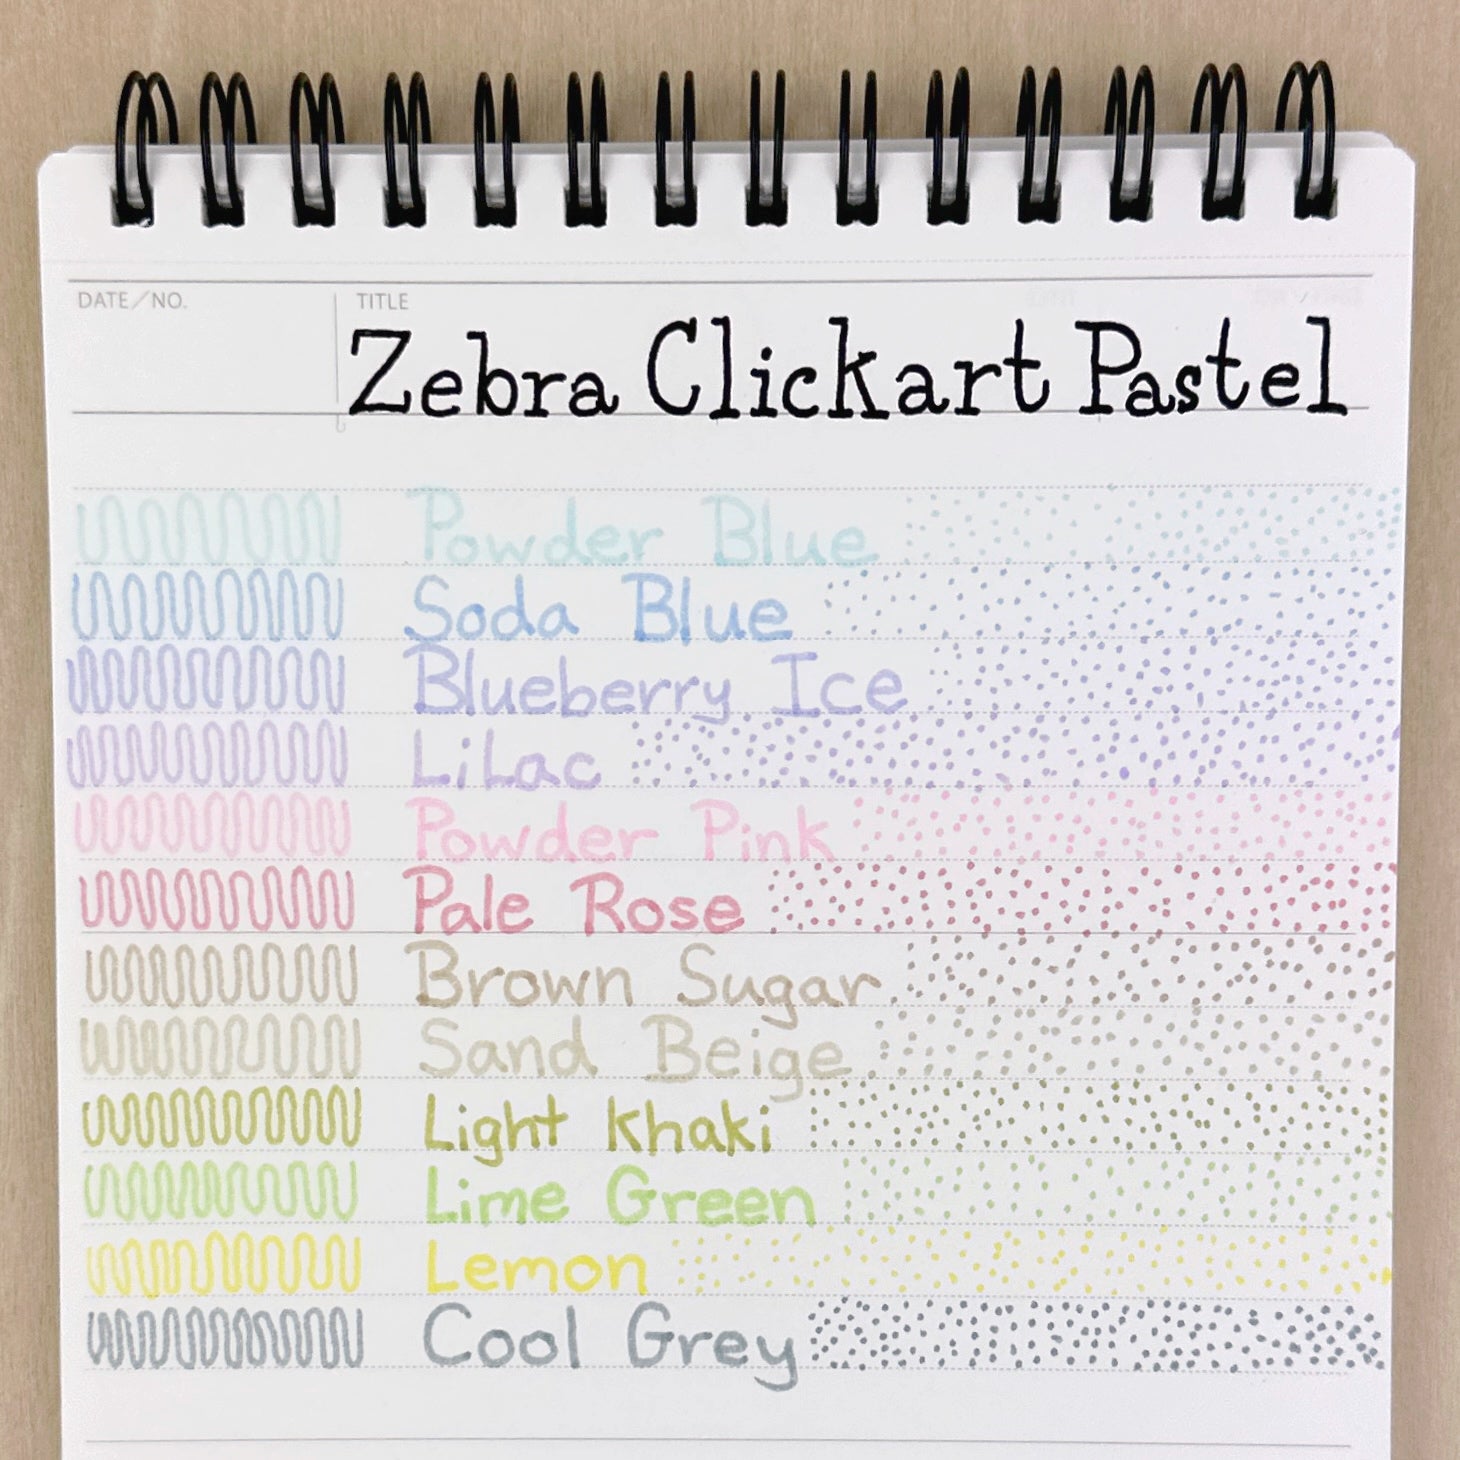 Zebra CLiCKART Retractable Marker Pen – Yoseka Stationery